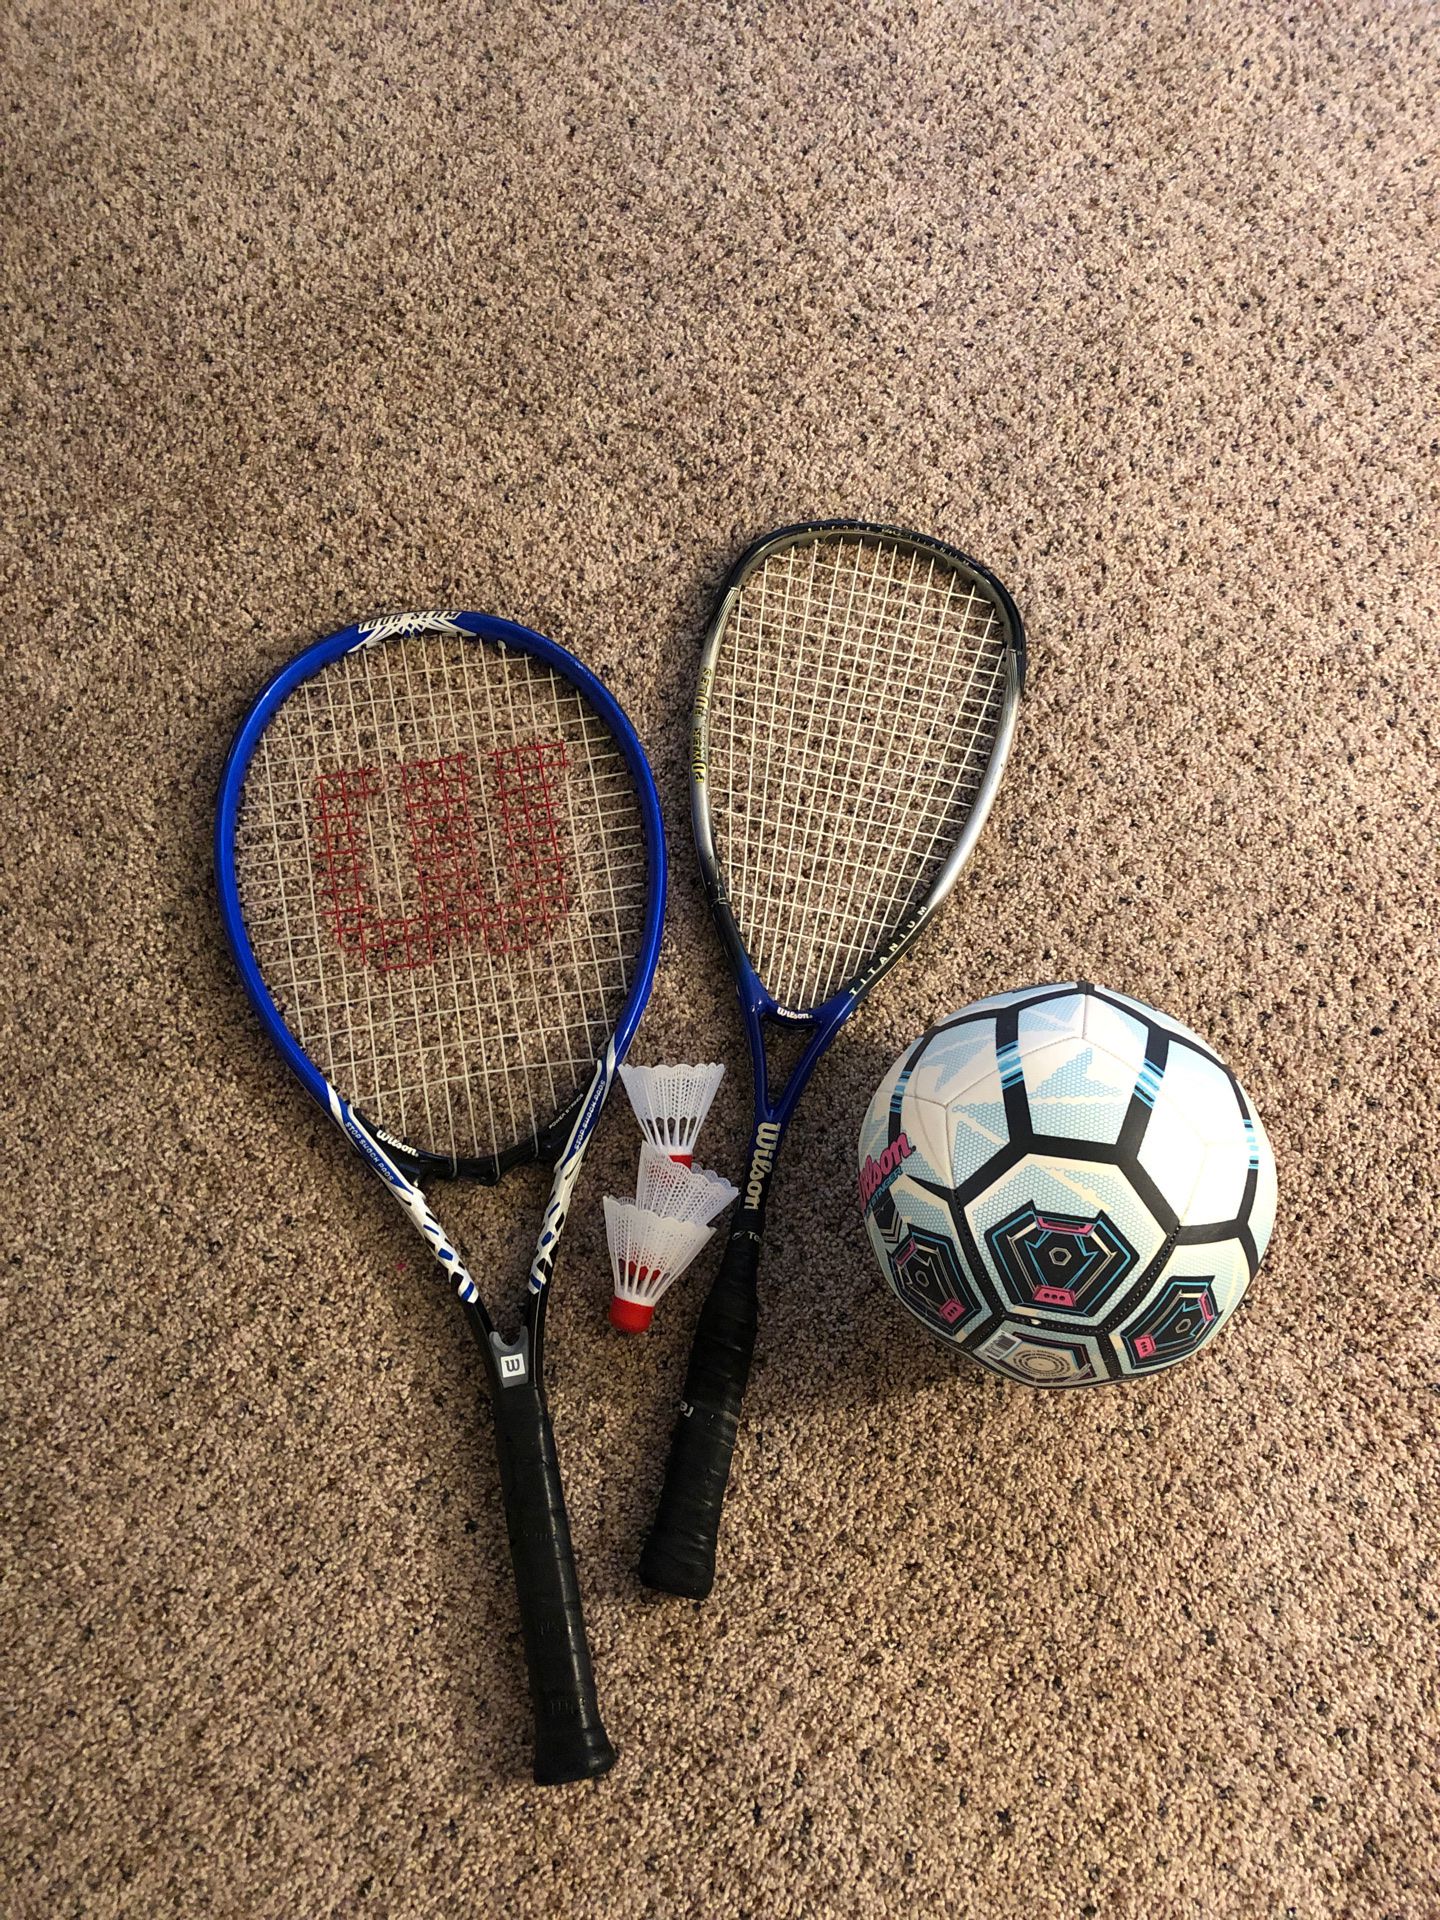 Tennis racquet, squash racket, football